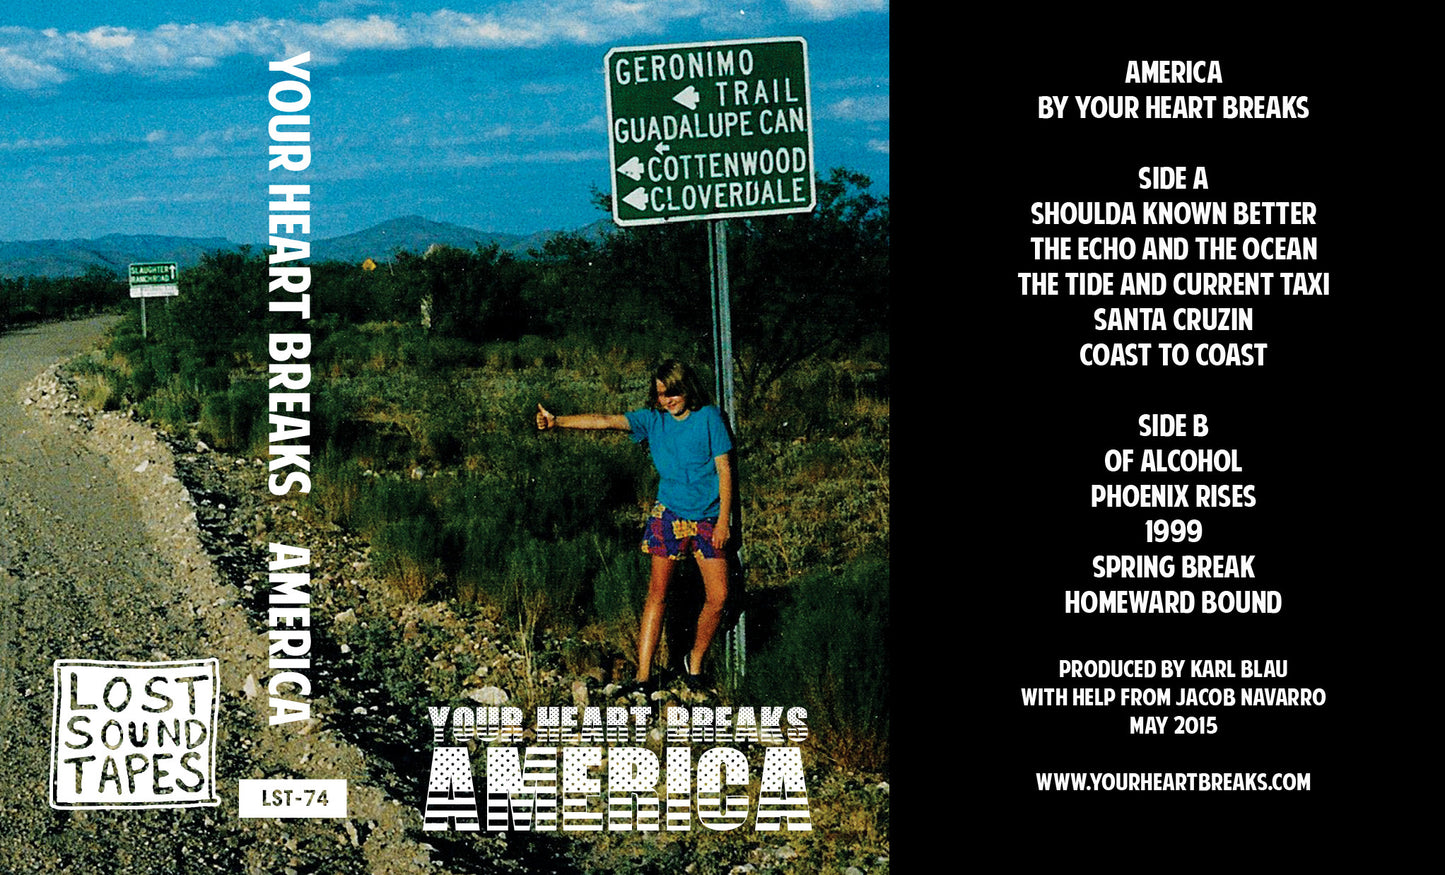 YOUR HEART BREAKS "America" cassette tape